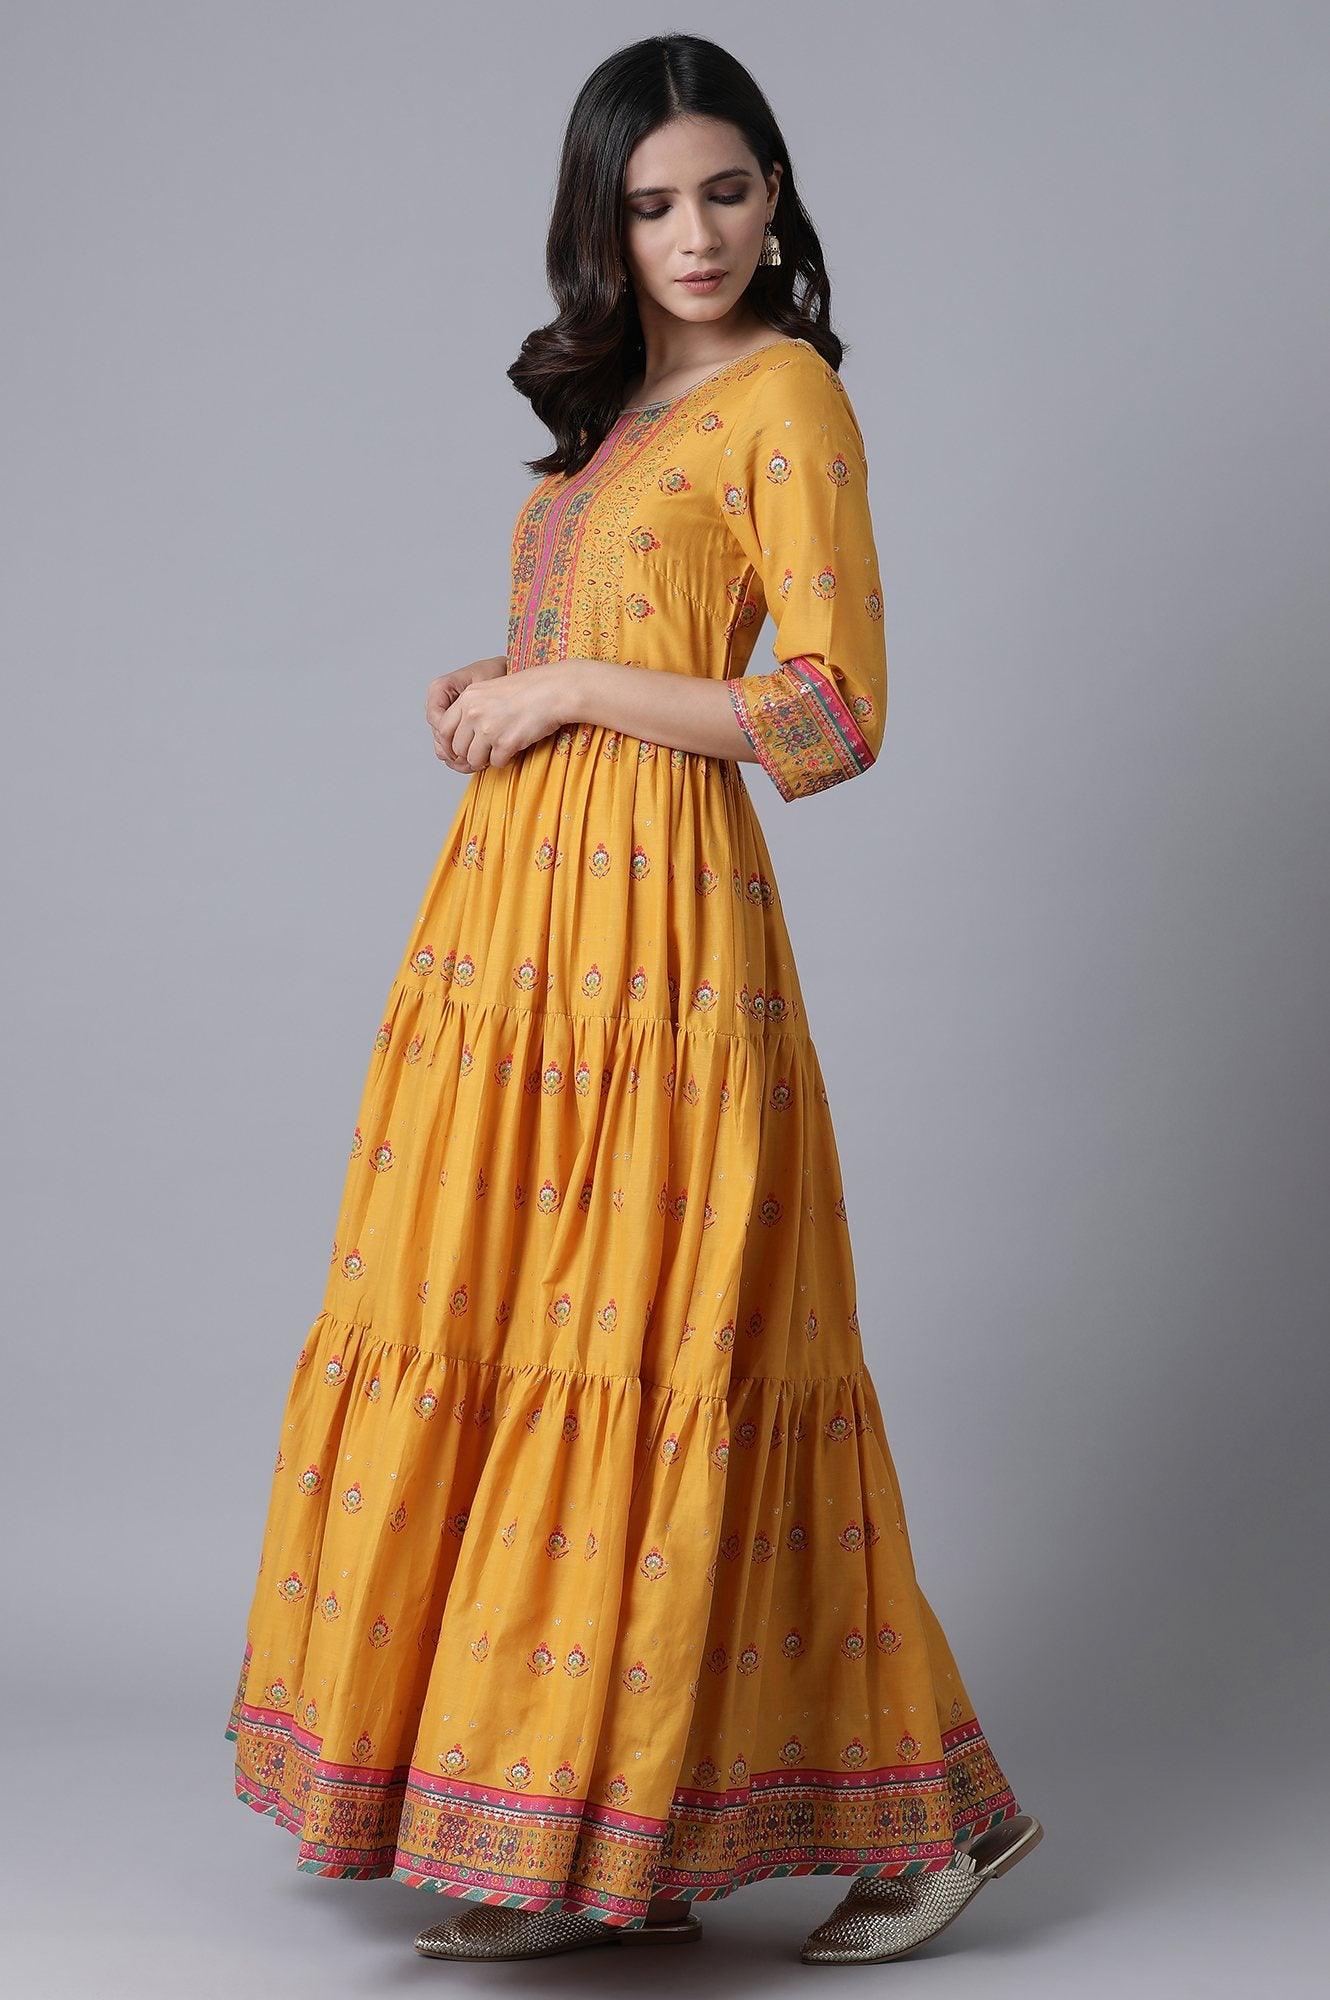 Yellow Printed Tiered Dress - wforwoman